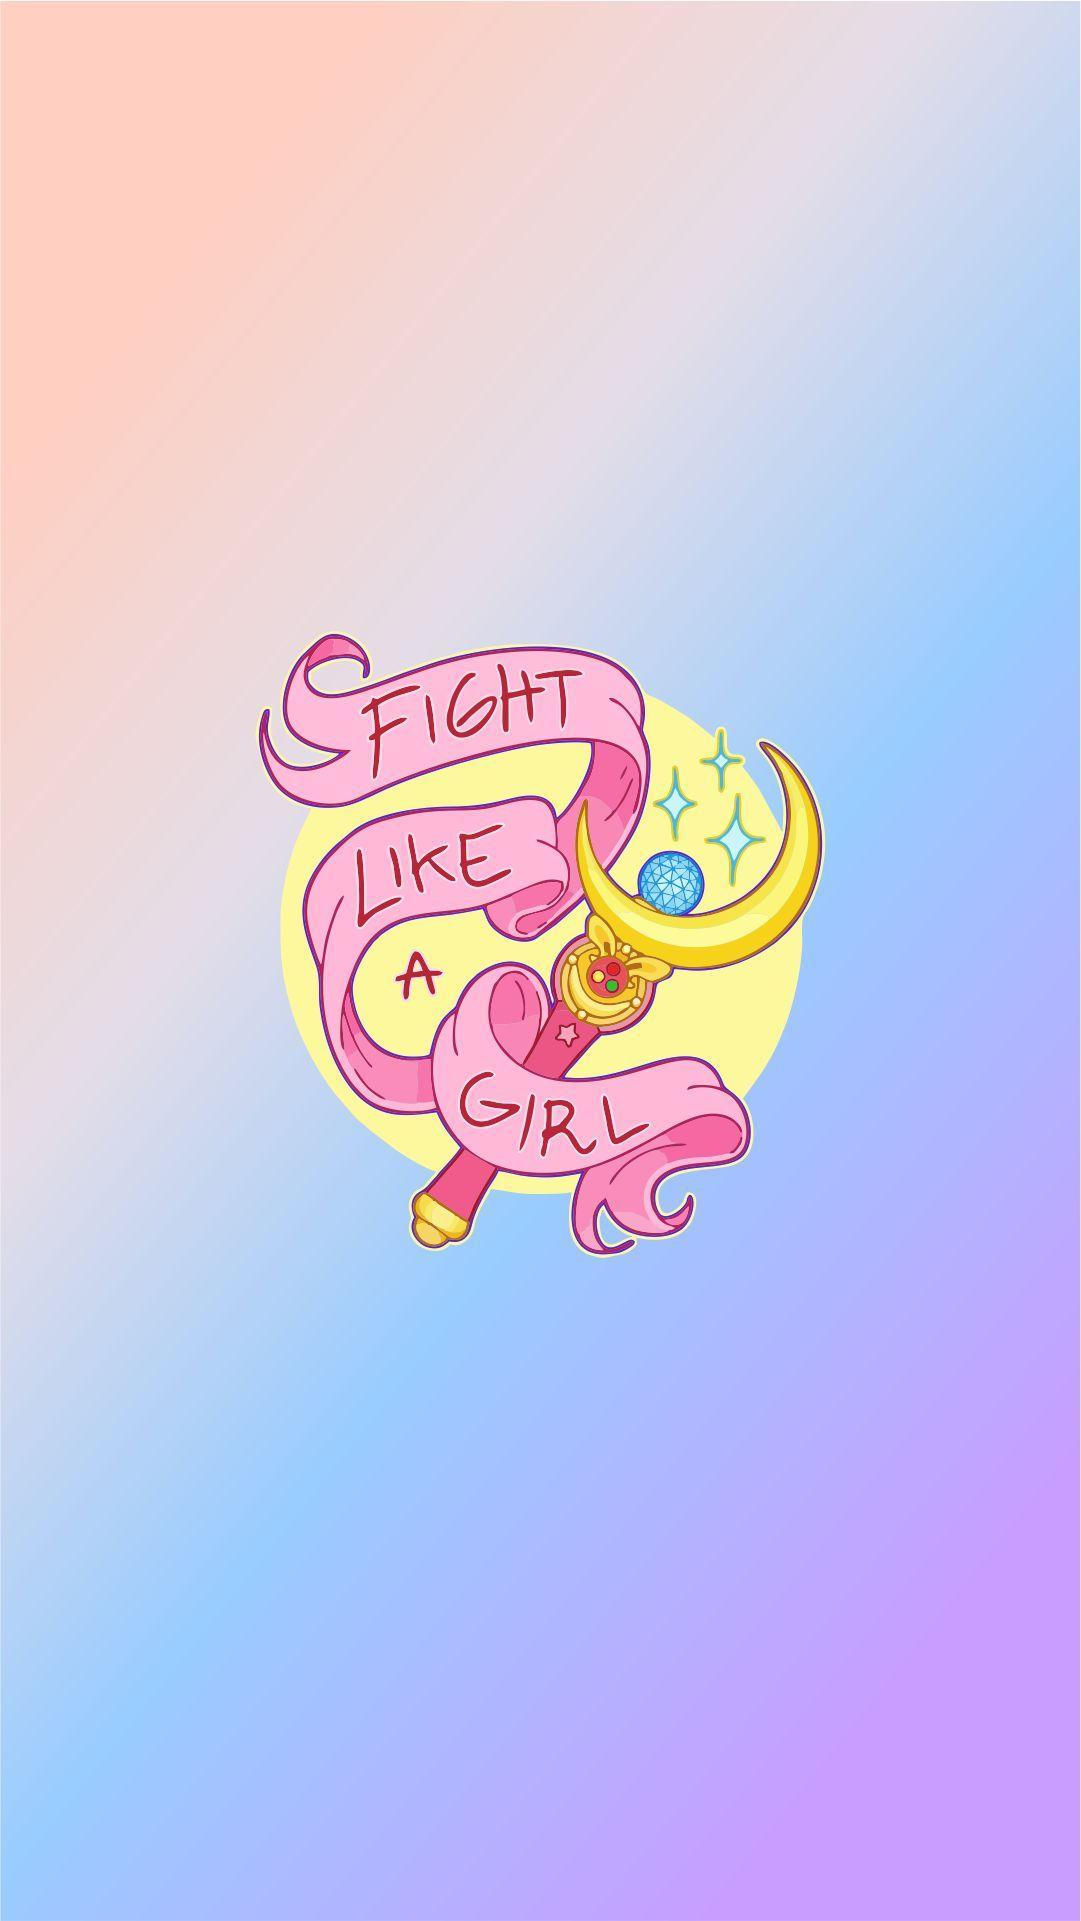 Fight Like a Girl wallpaper. Sailor moon wallpaper, Sailor moon quotes, Sailor moon aesthetic